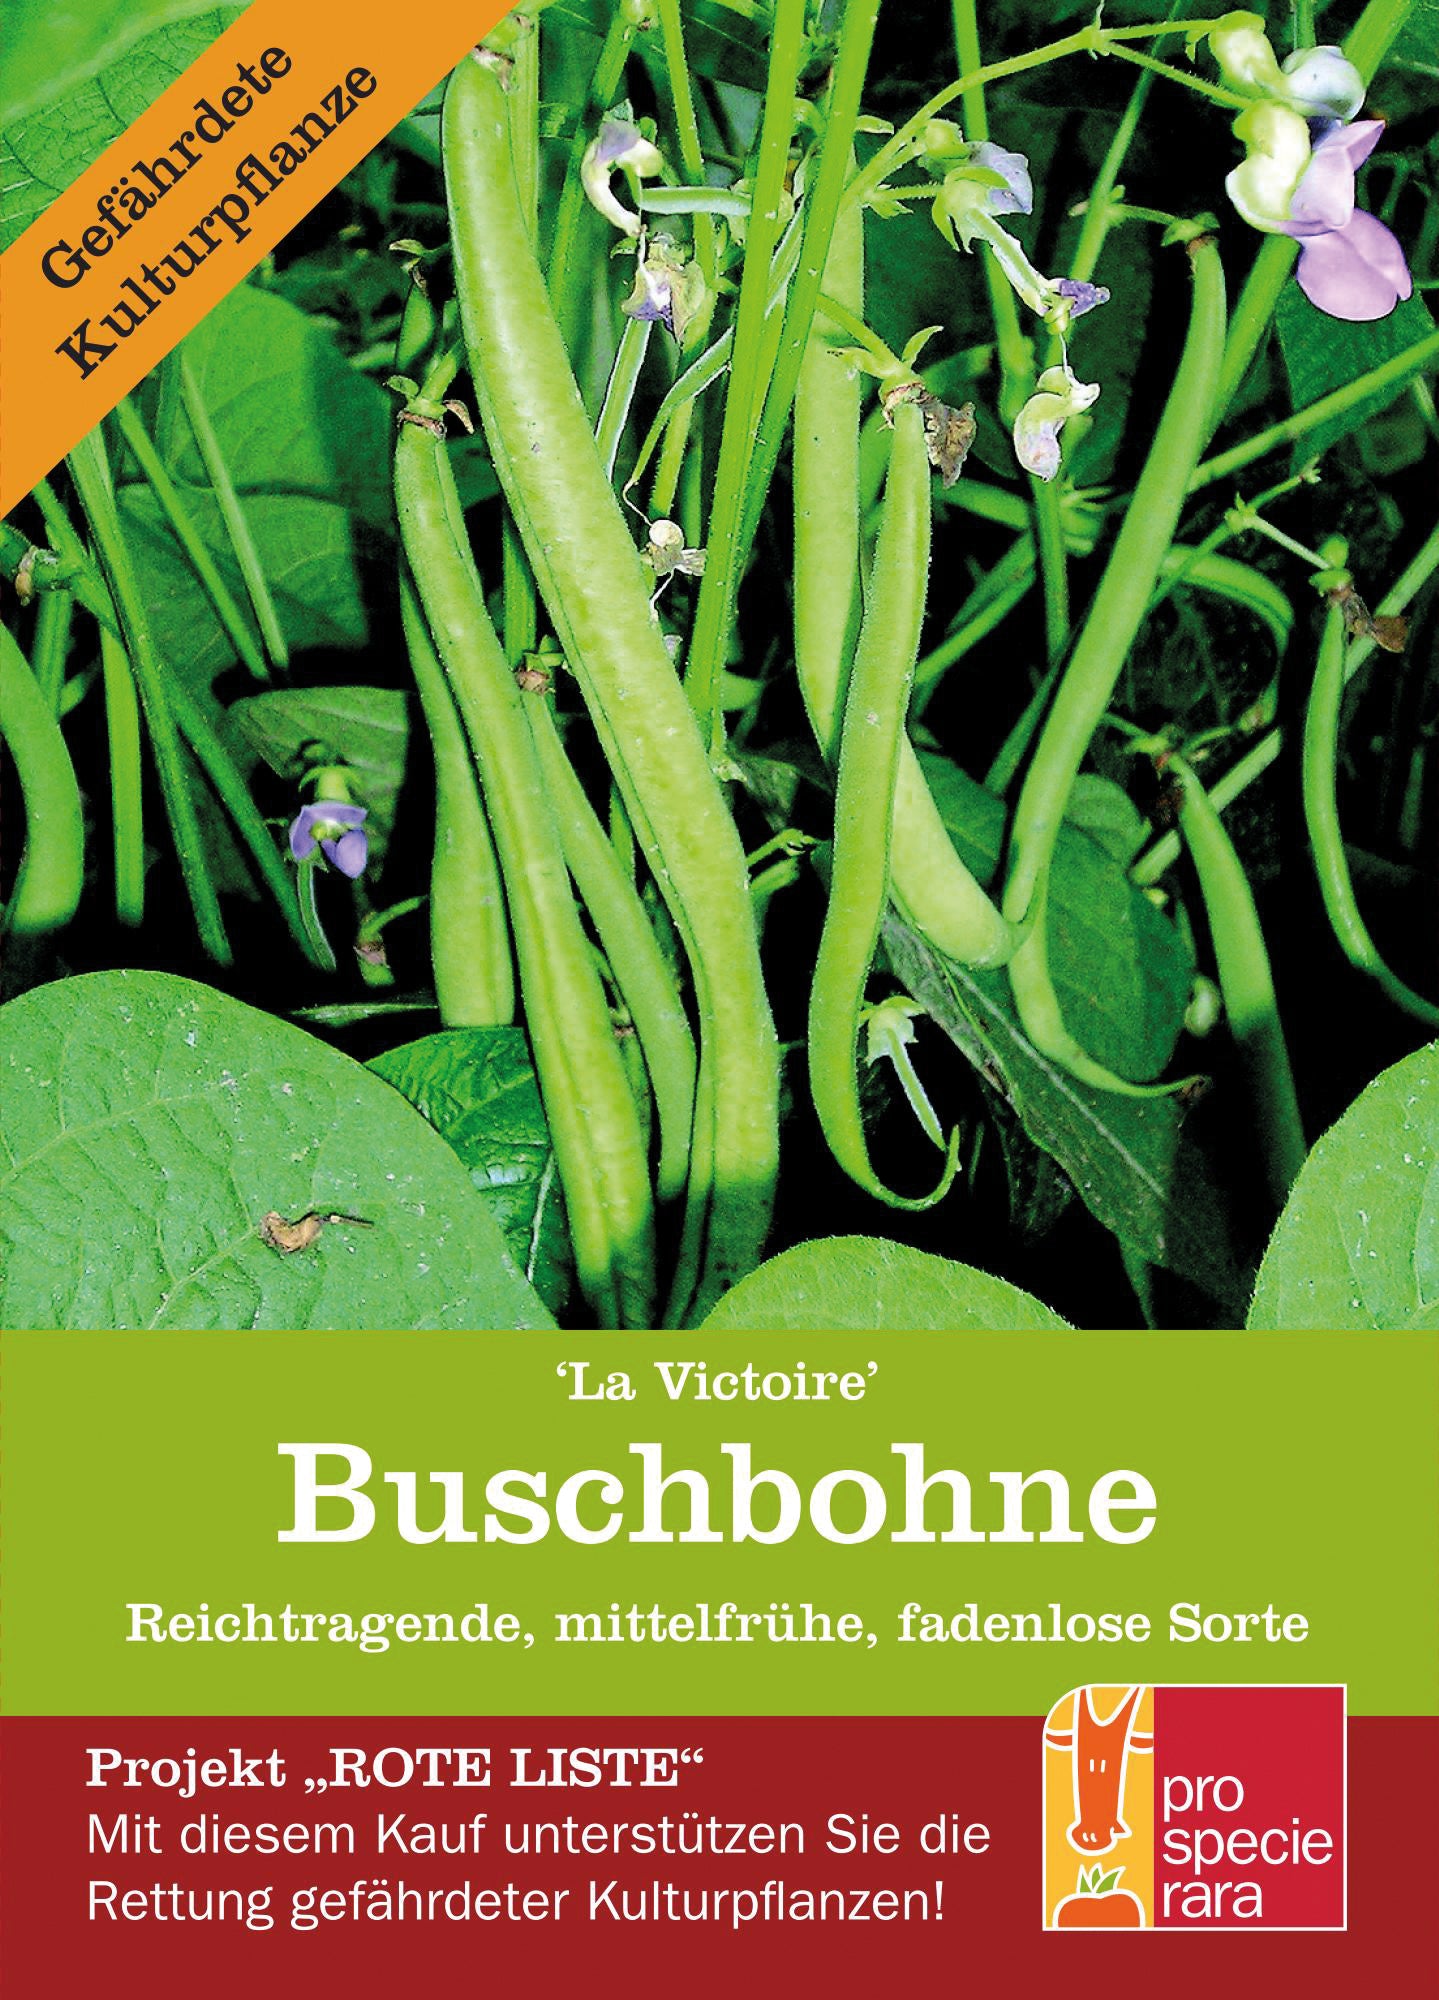 Buschbohne La Victoire | BIO Buschbohnensamen von ProSpecieRara